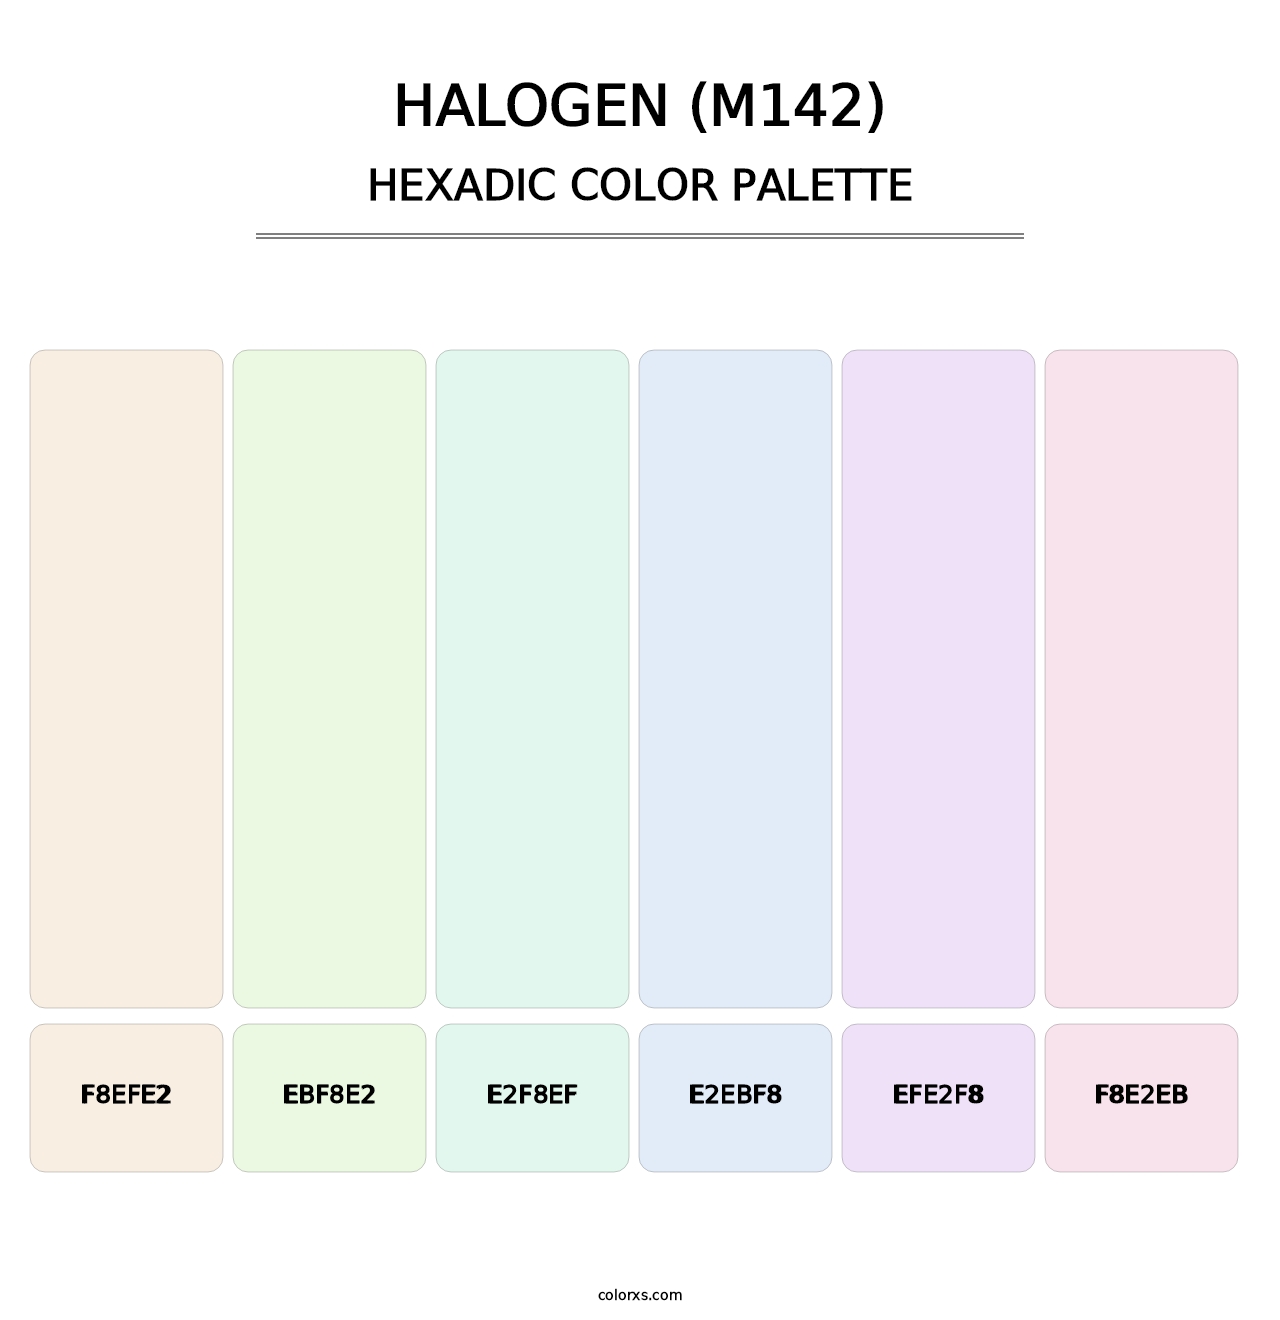 Halogen (M142) - Hexadic Color Palette